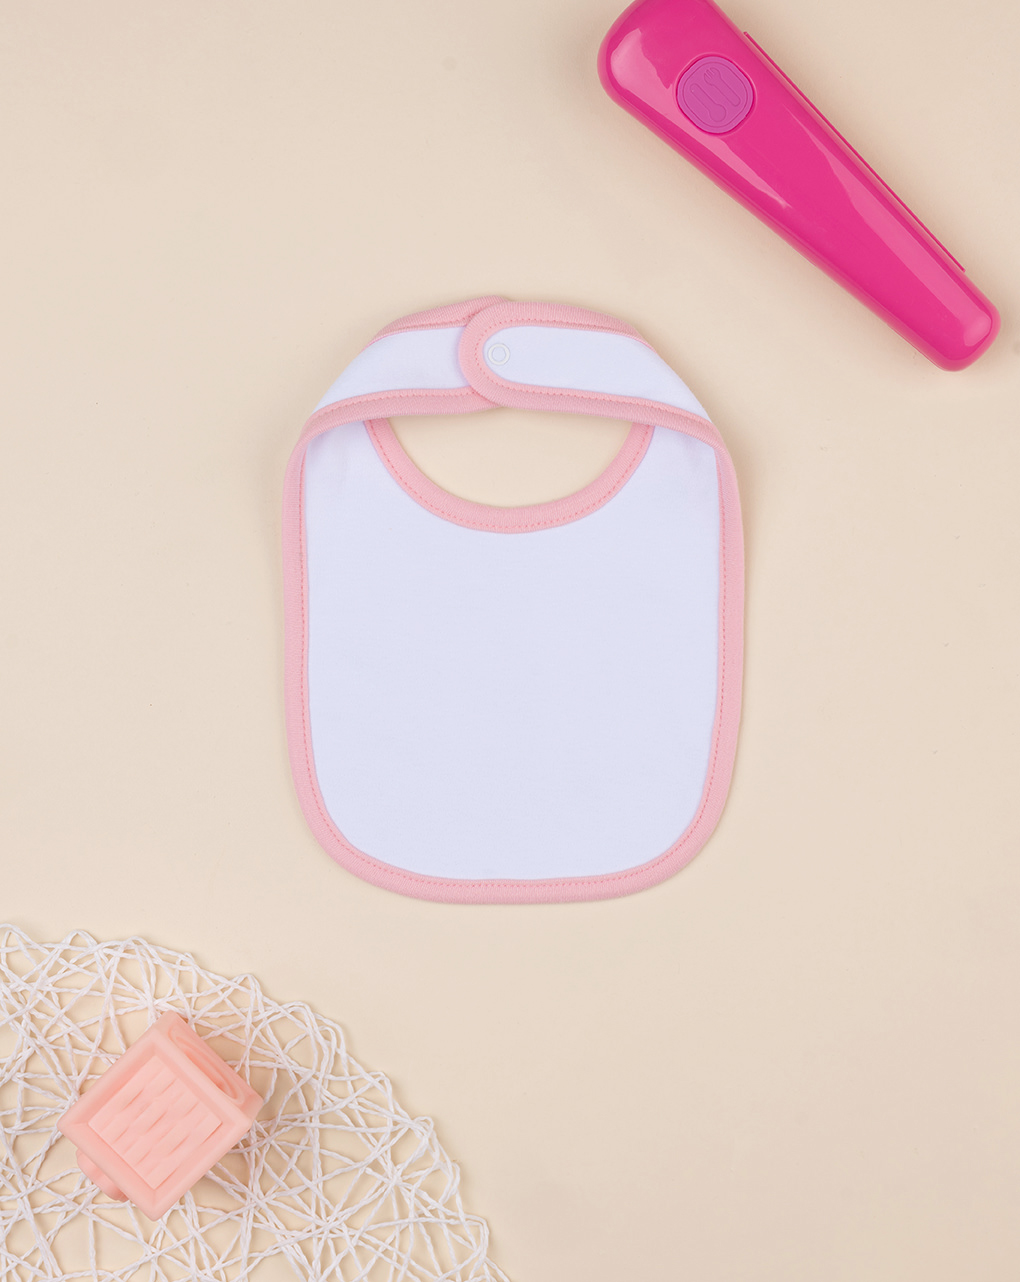 Babete cor-de-rosa para bebé menina com escrita - Prénatal